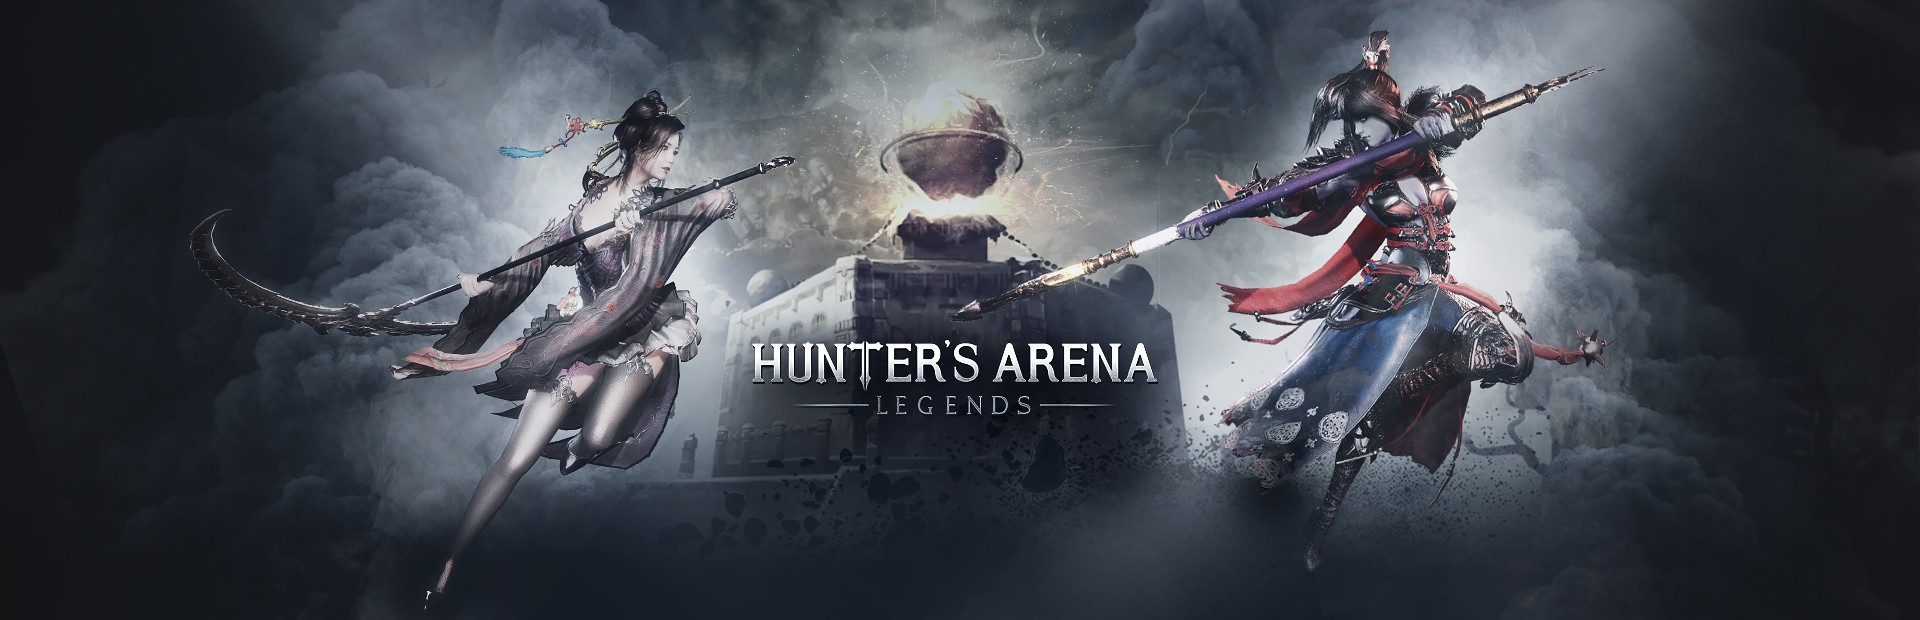 Hunter's Arena: Legends cover image